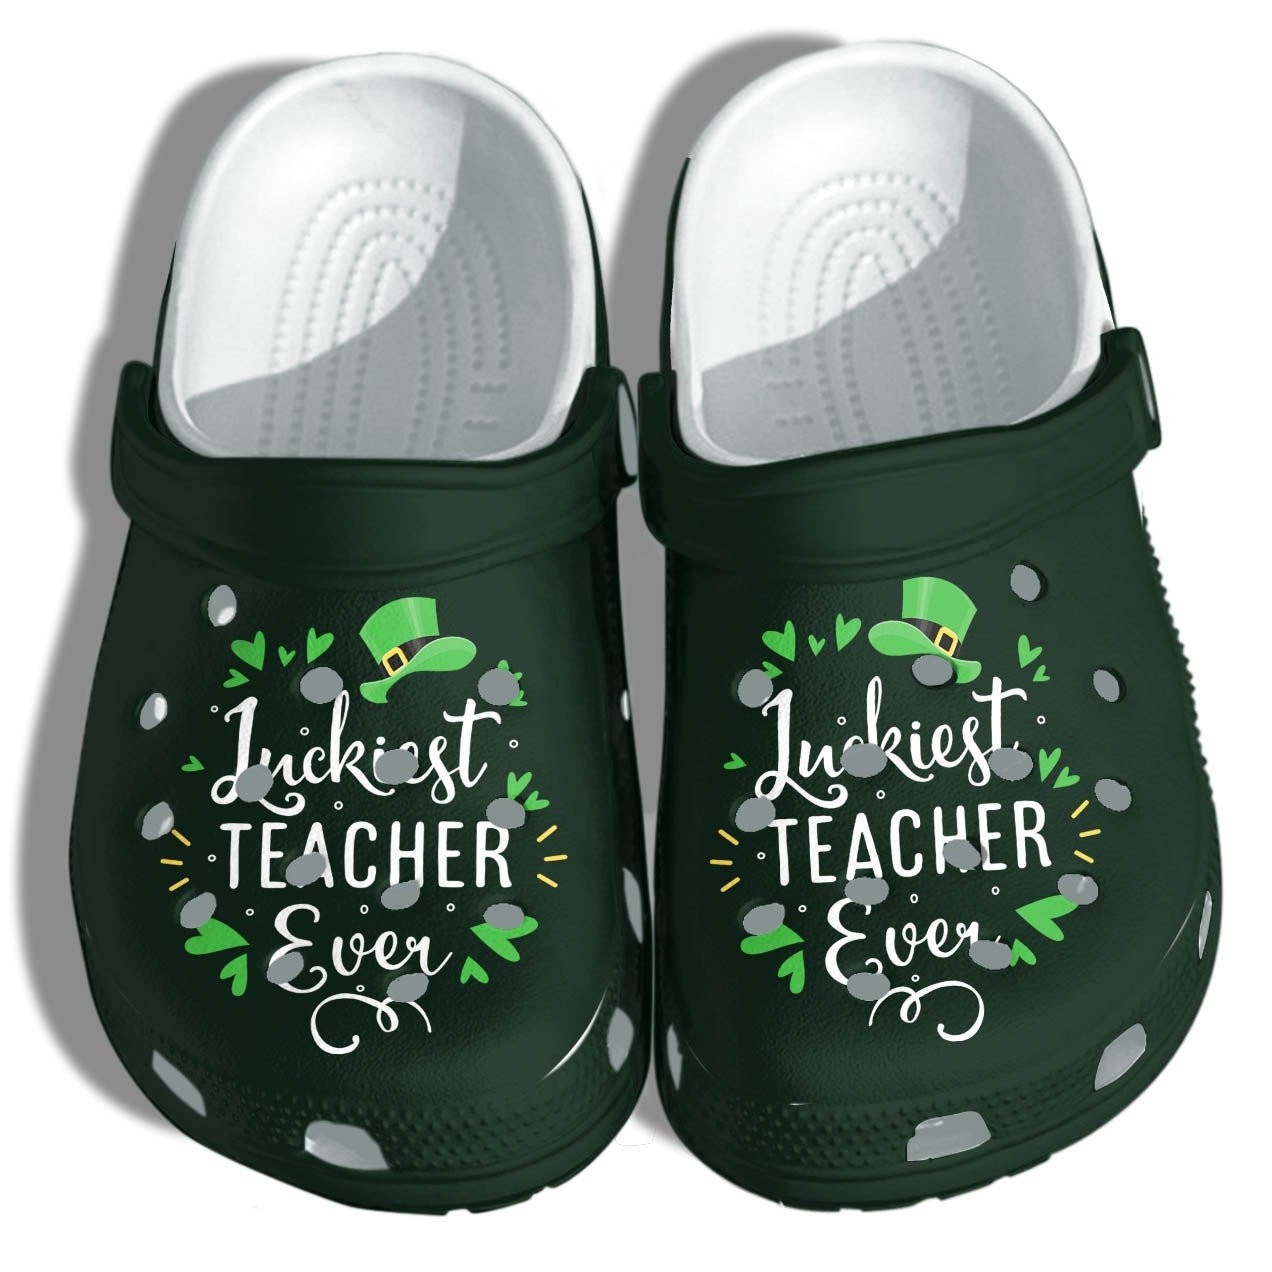 Luckiest Teacher Ever Crocs Clog Shoes Funny Irish Teacher - Funny Crocs Clog Shoes Patricks Day Gifts